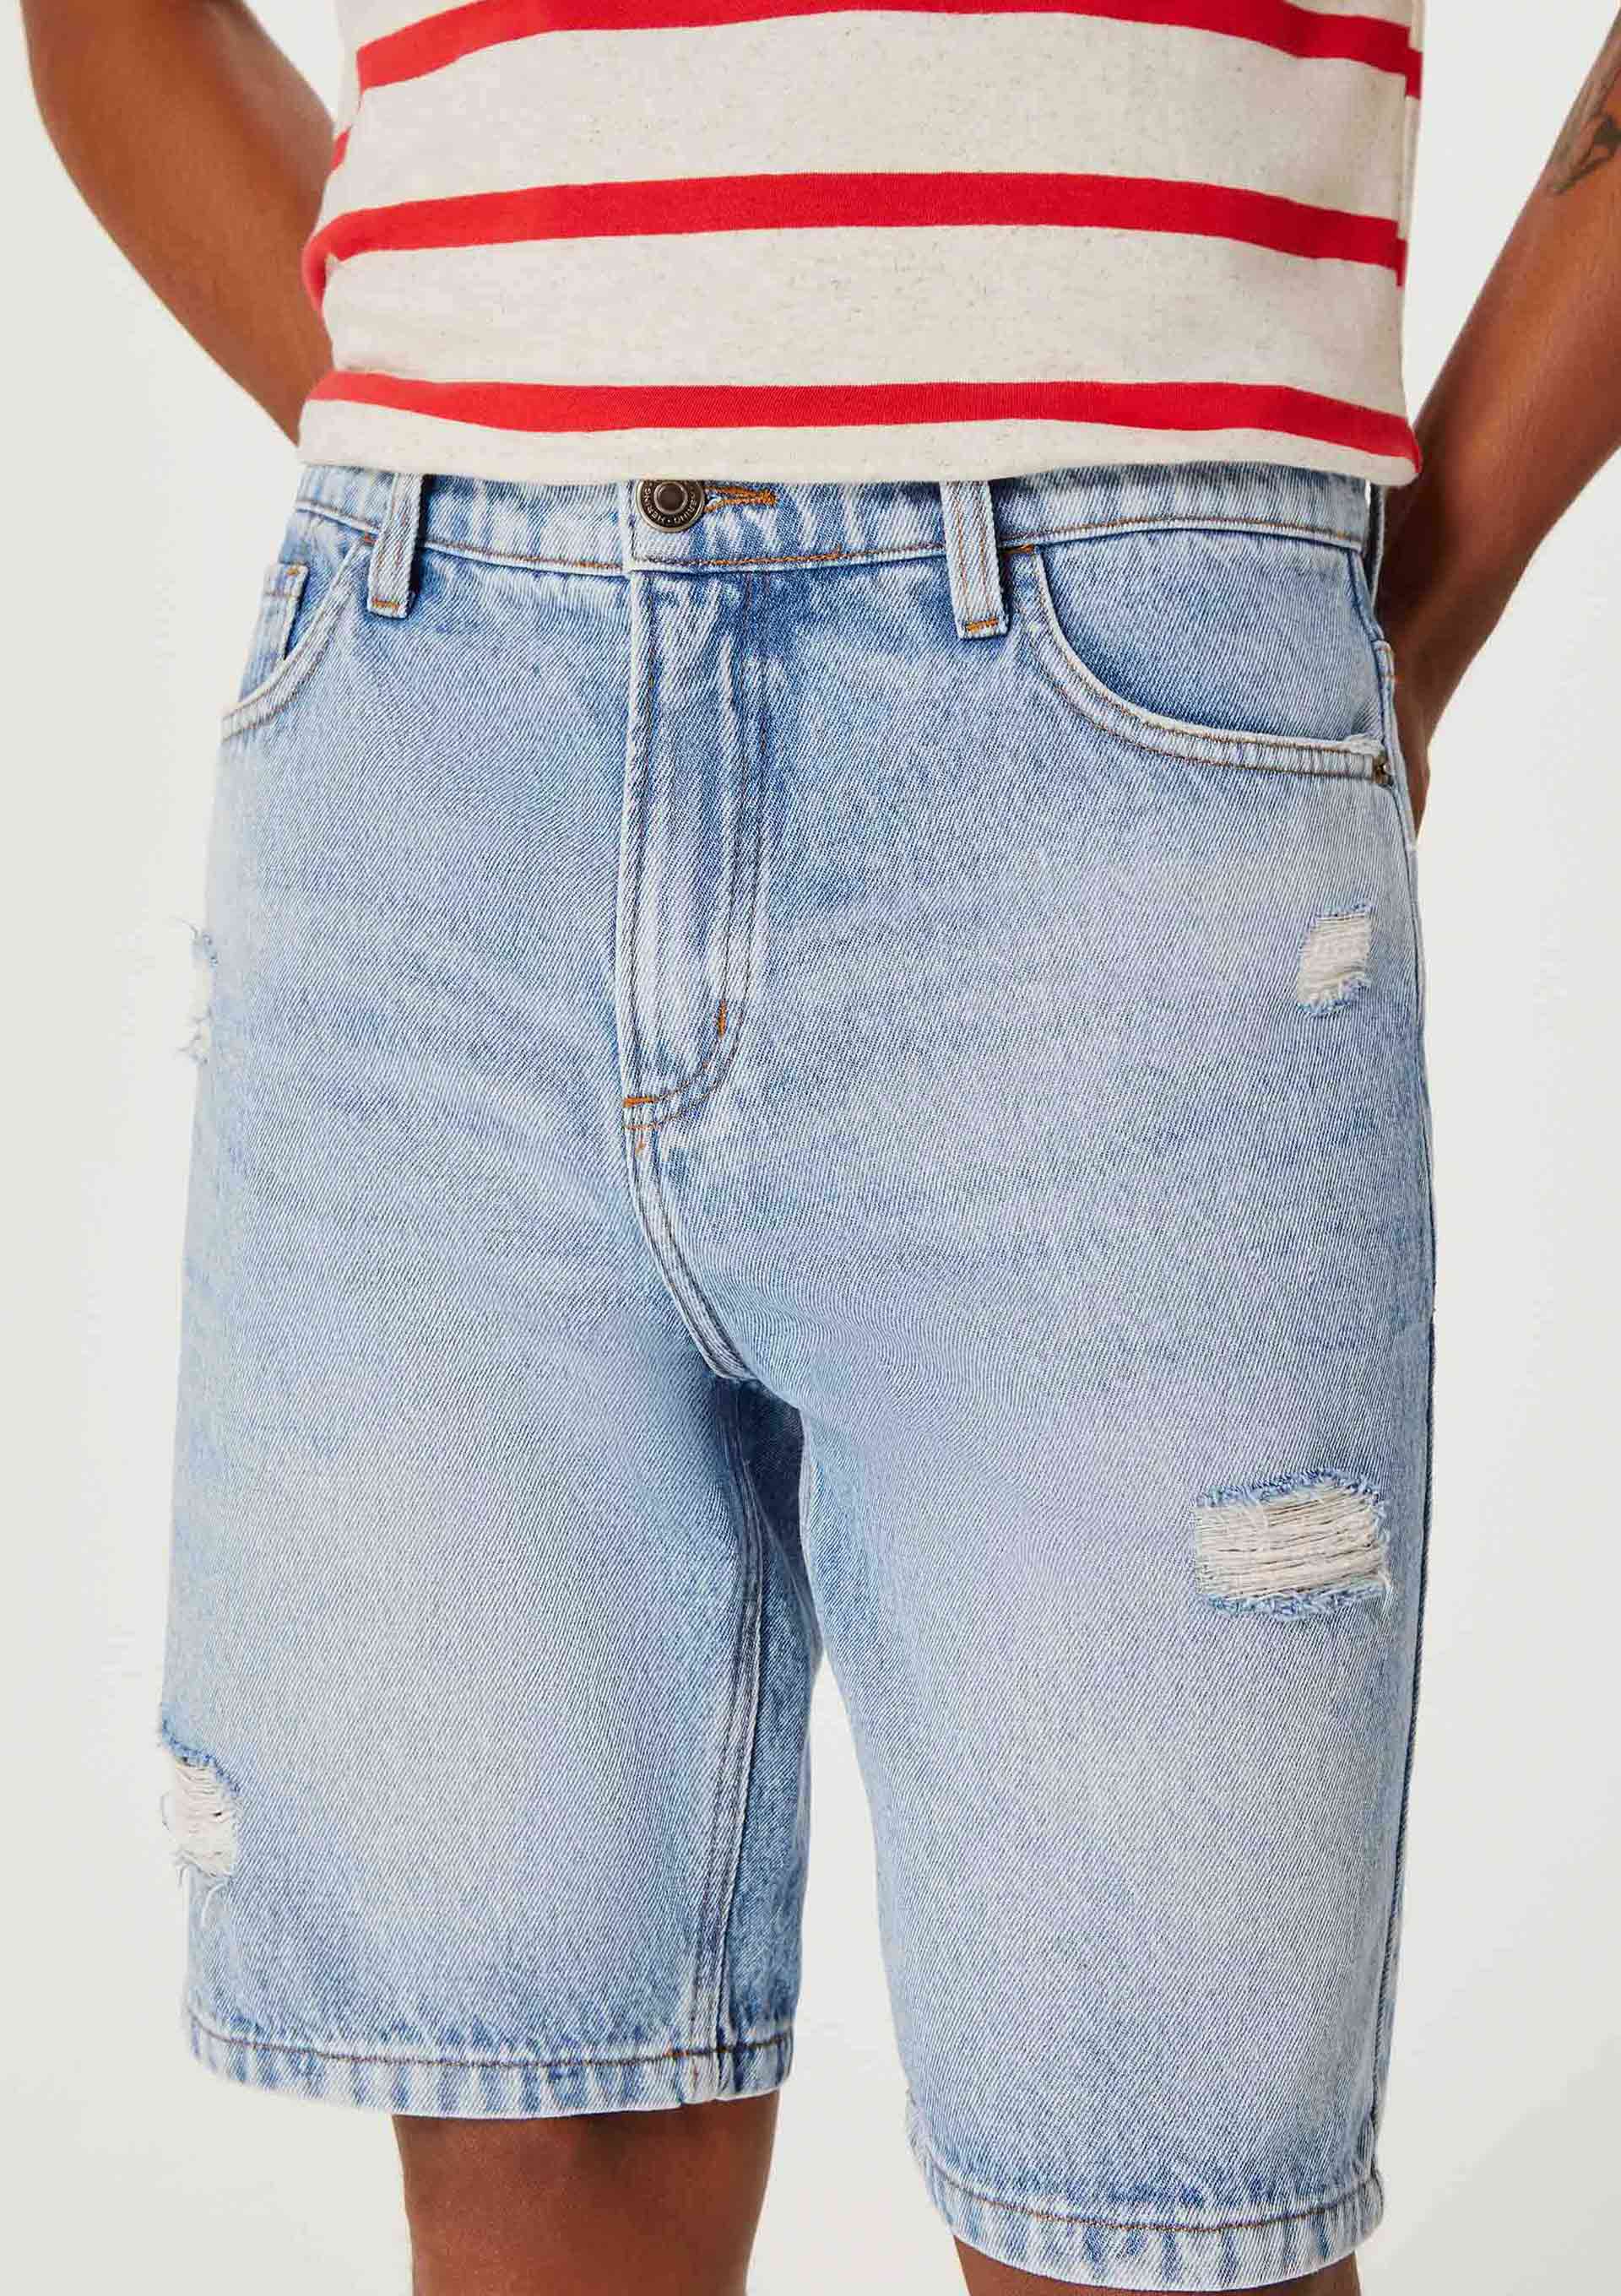 Bermuda Masculina Jeans c/ Puídos Média